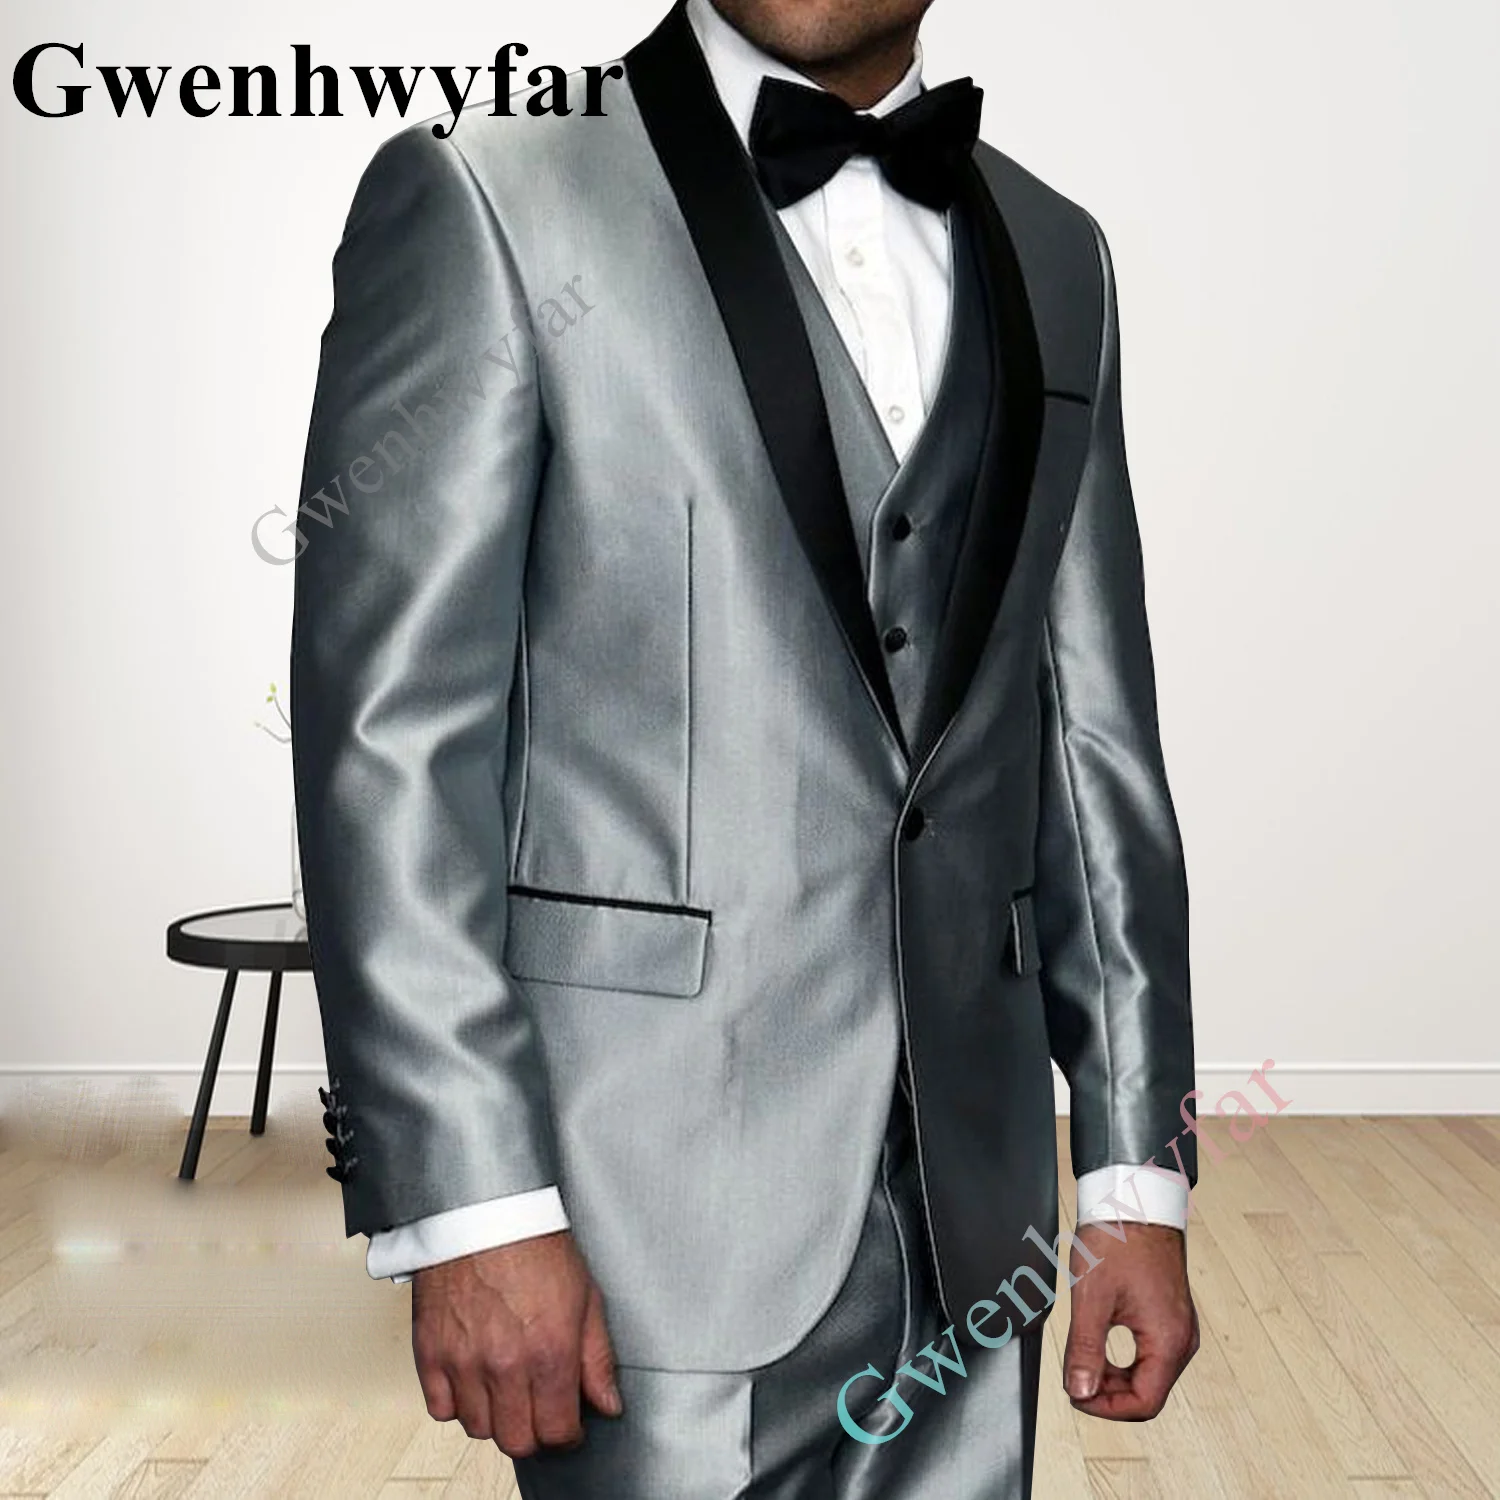 

Gwenhwyfar Charcoal Grey Men's Suit Peaked Lapel 3 Pcs 1 Button Groom Tuxedos Wedding Suit For Men Set Custom Made (Jacket+Pant)